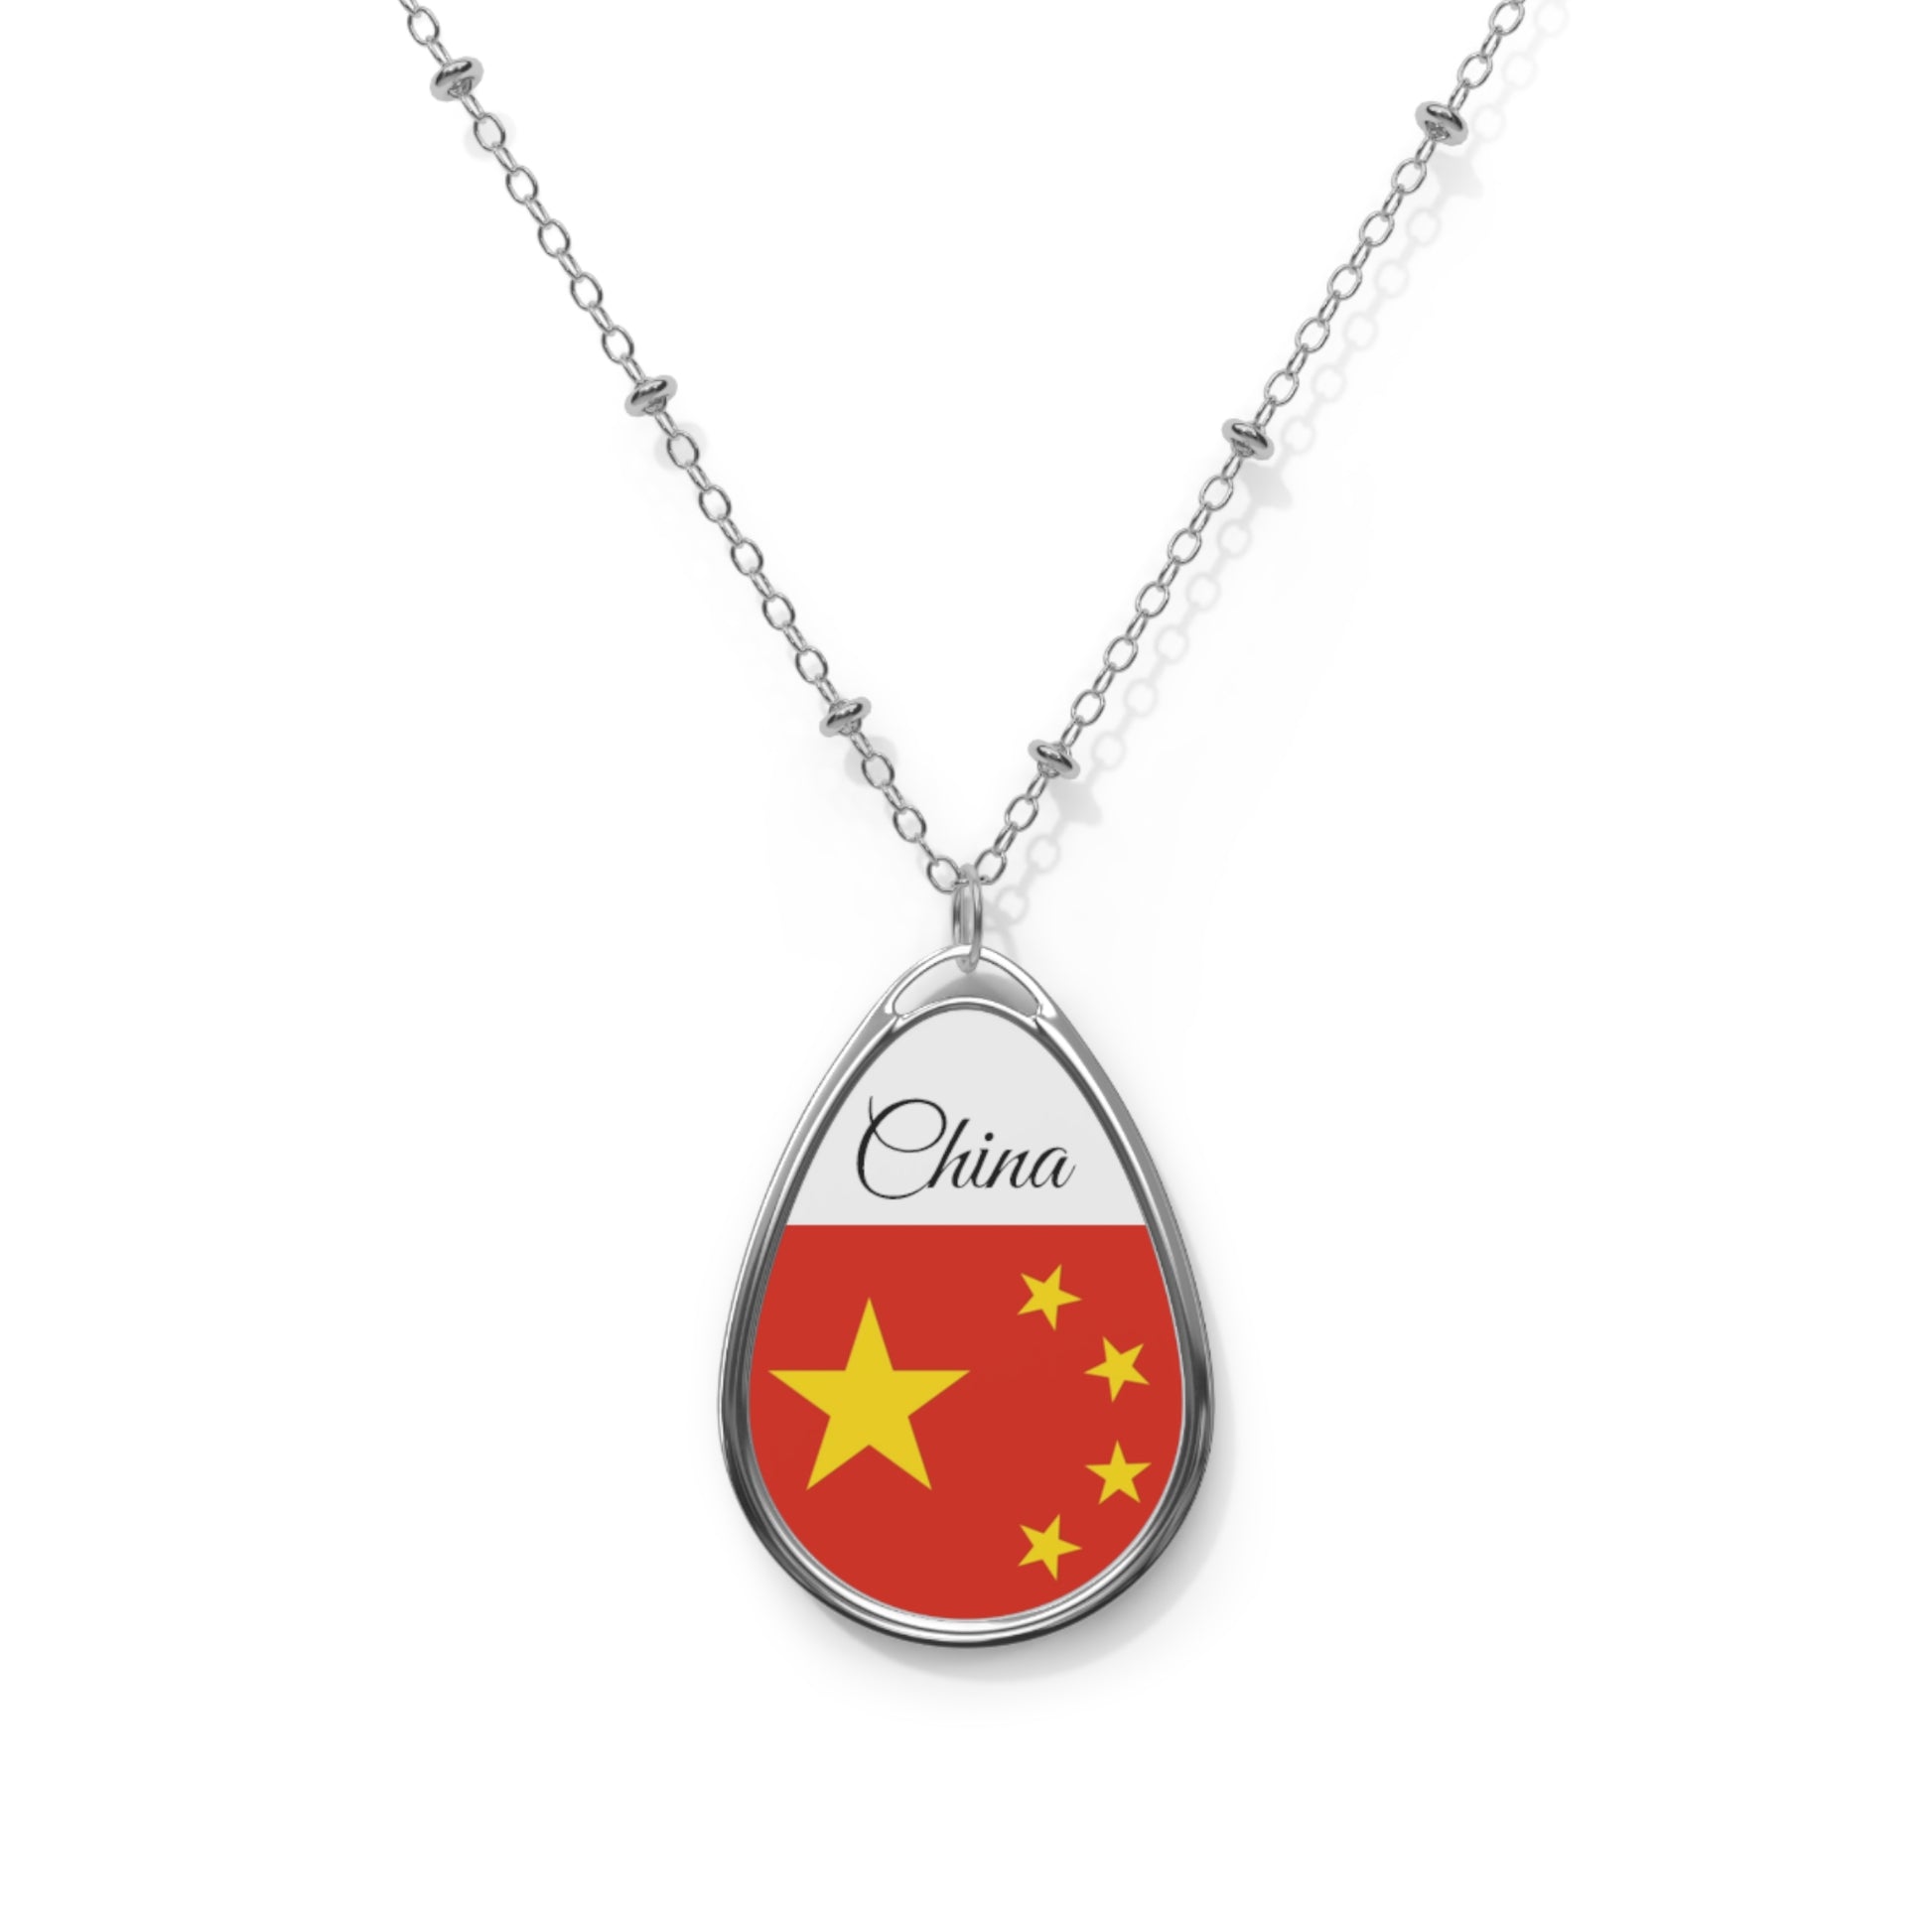 China Flag Necklace / PChina Flag Necklace / Patriotic Jewelry For China Loversatriotic Jewelry For China Lovers